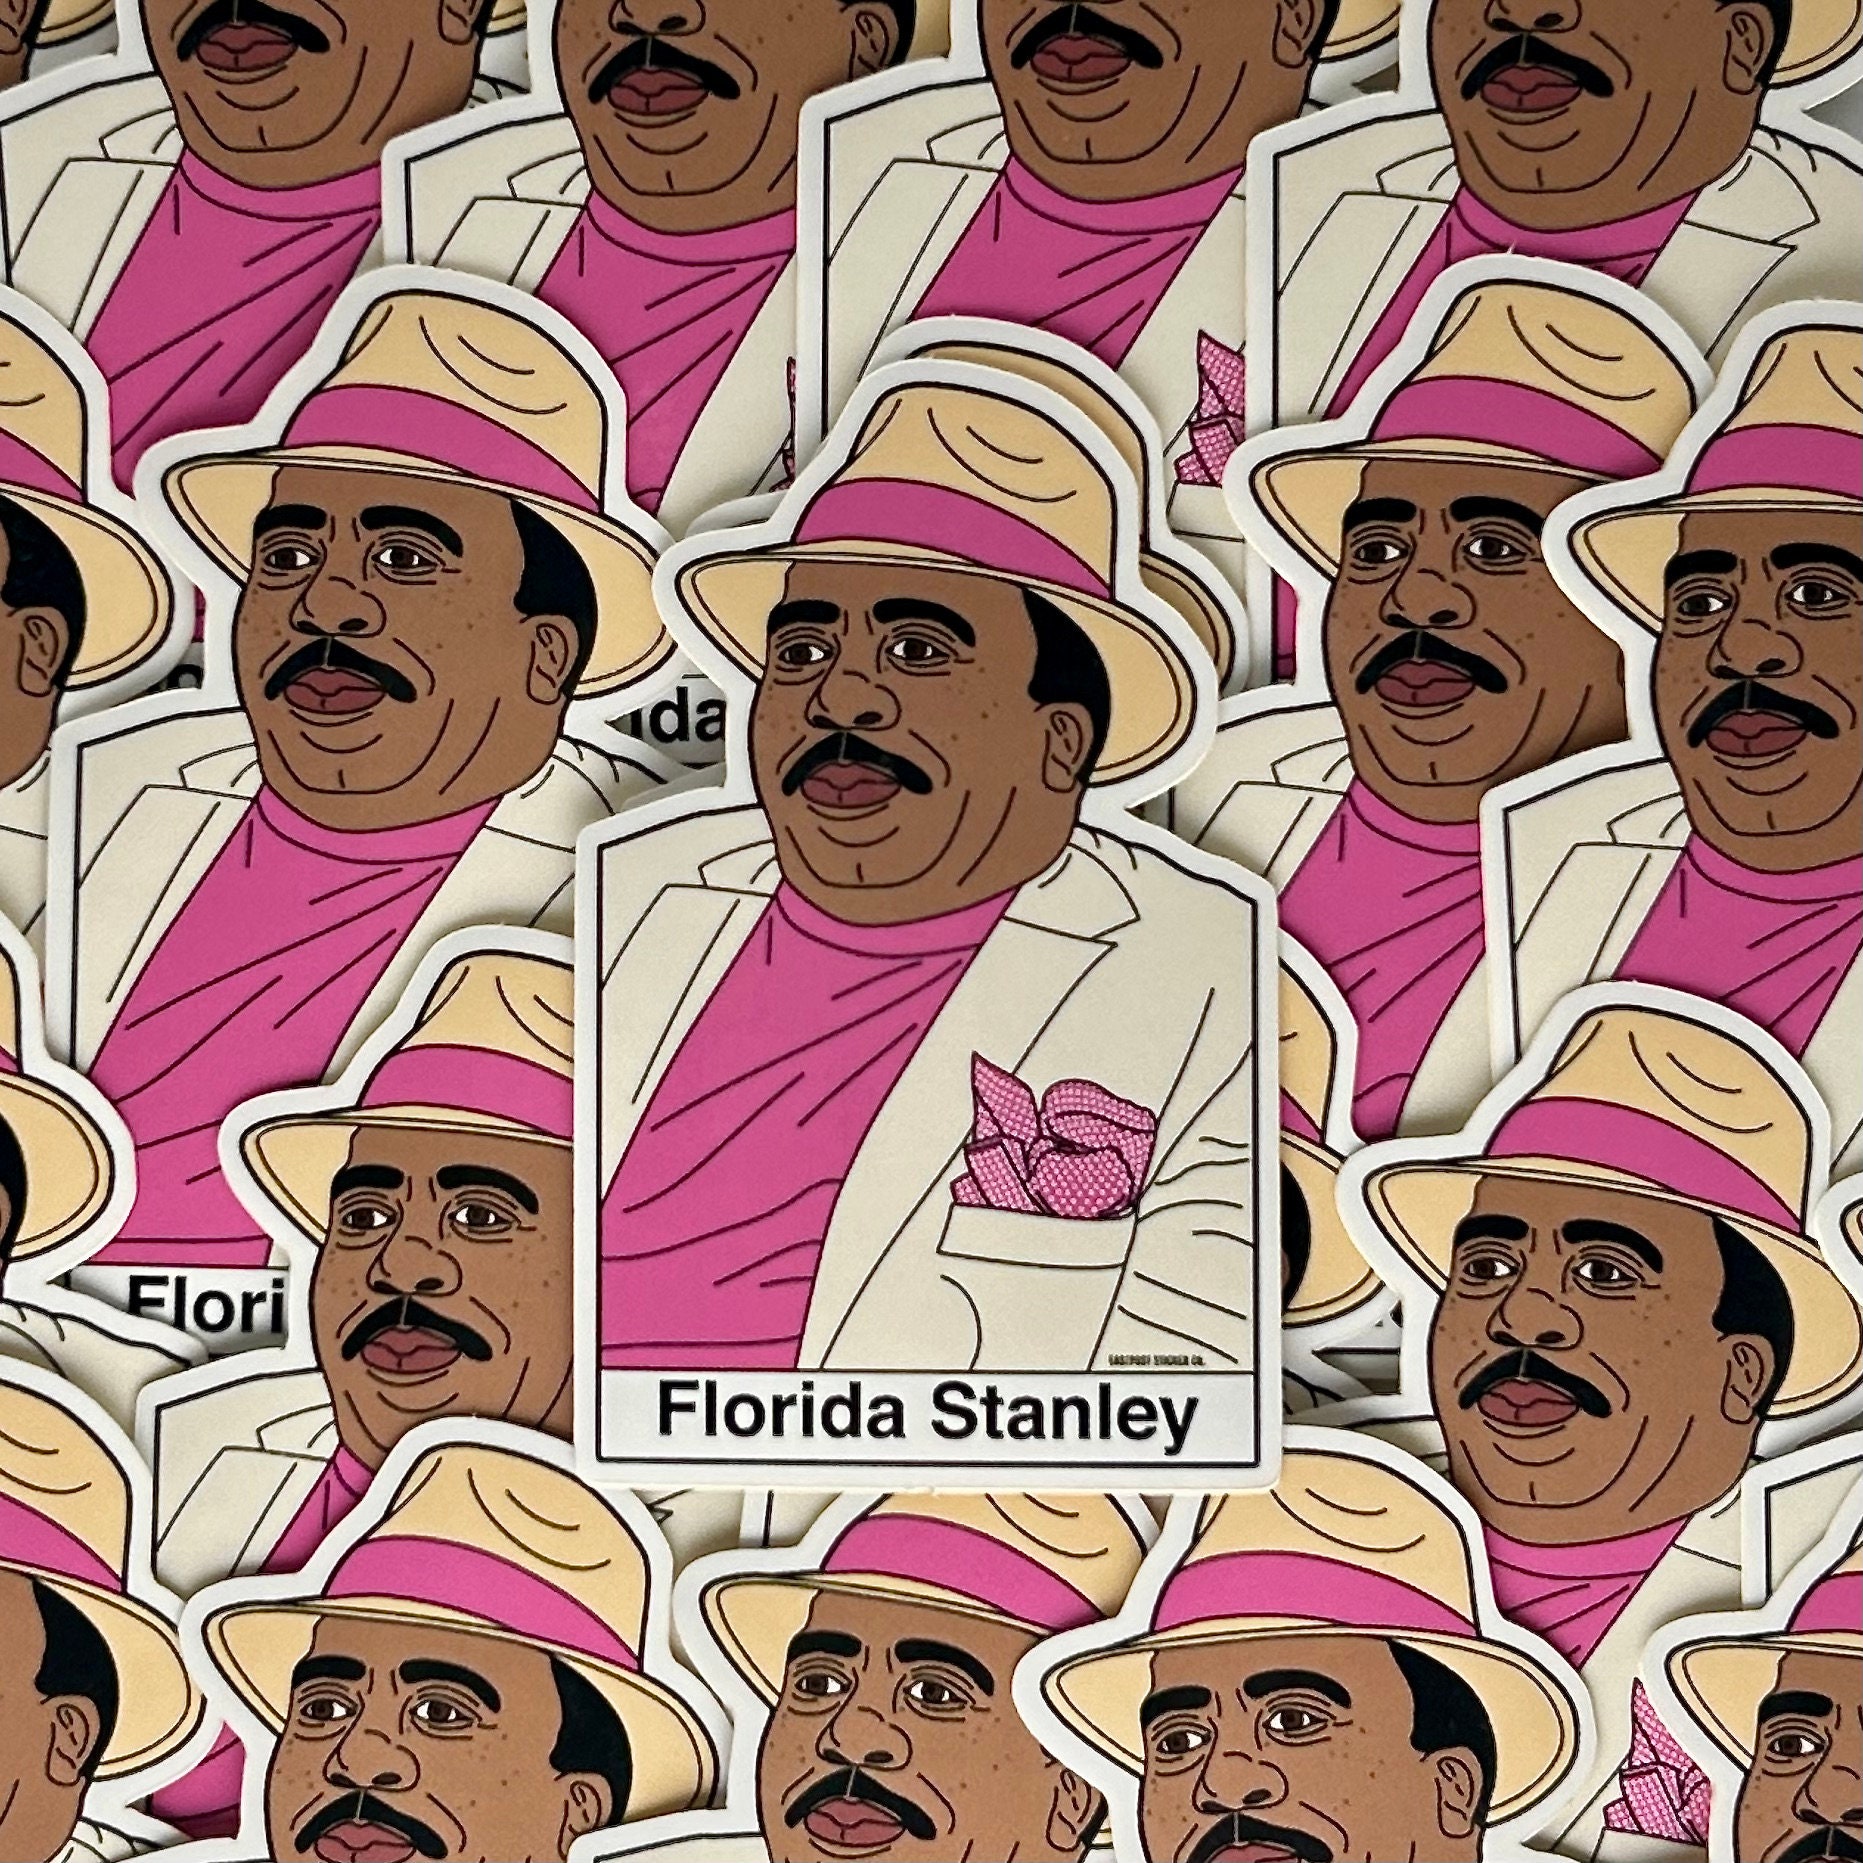 Florida Stanley